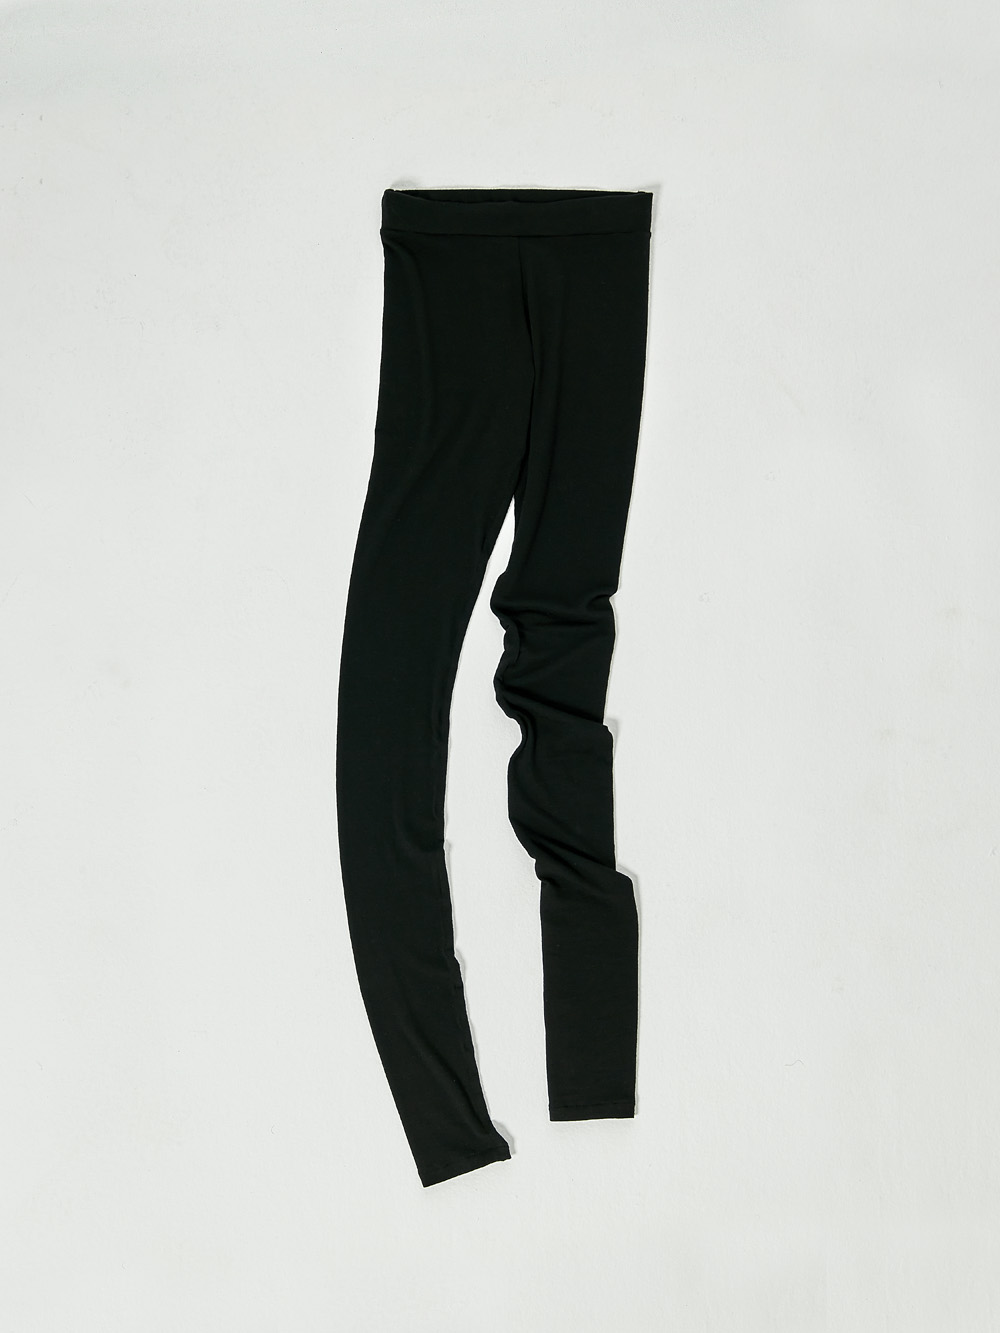 Zara FW HIGH-WAIST EXTRA LONG FAUX LEATHER LEGGINGS PANT BLACK XS-XXL  5427/257 | eBay